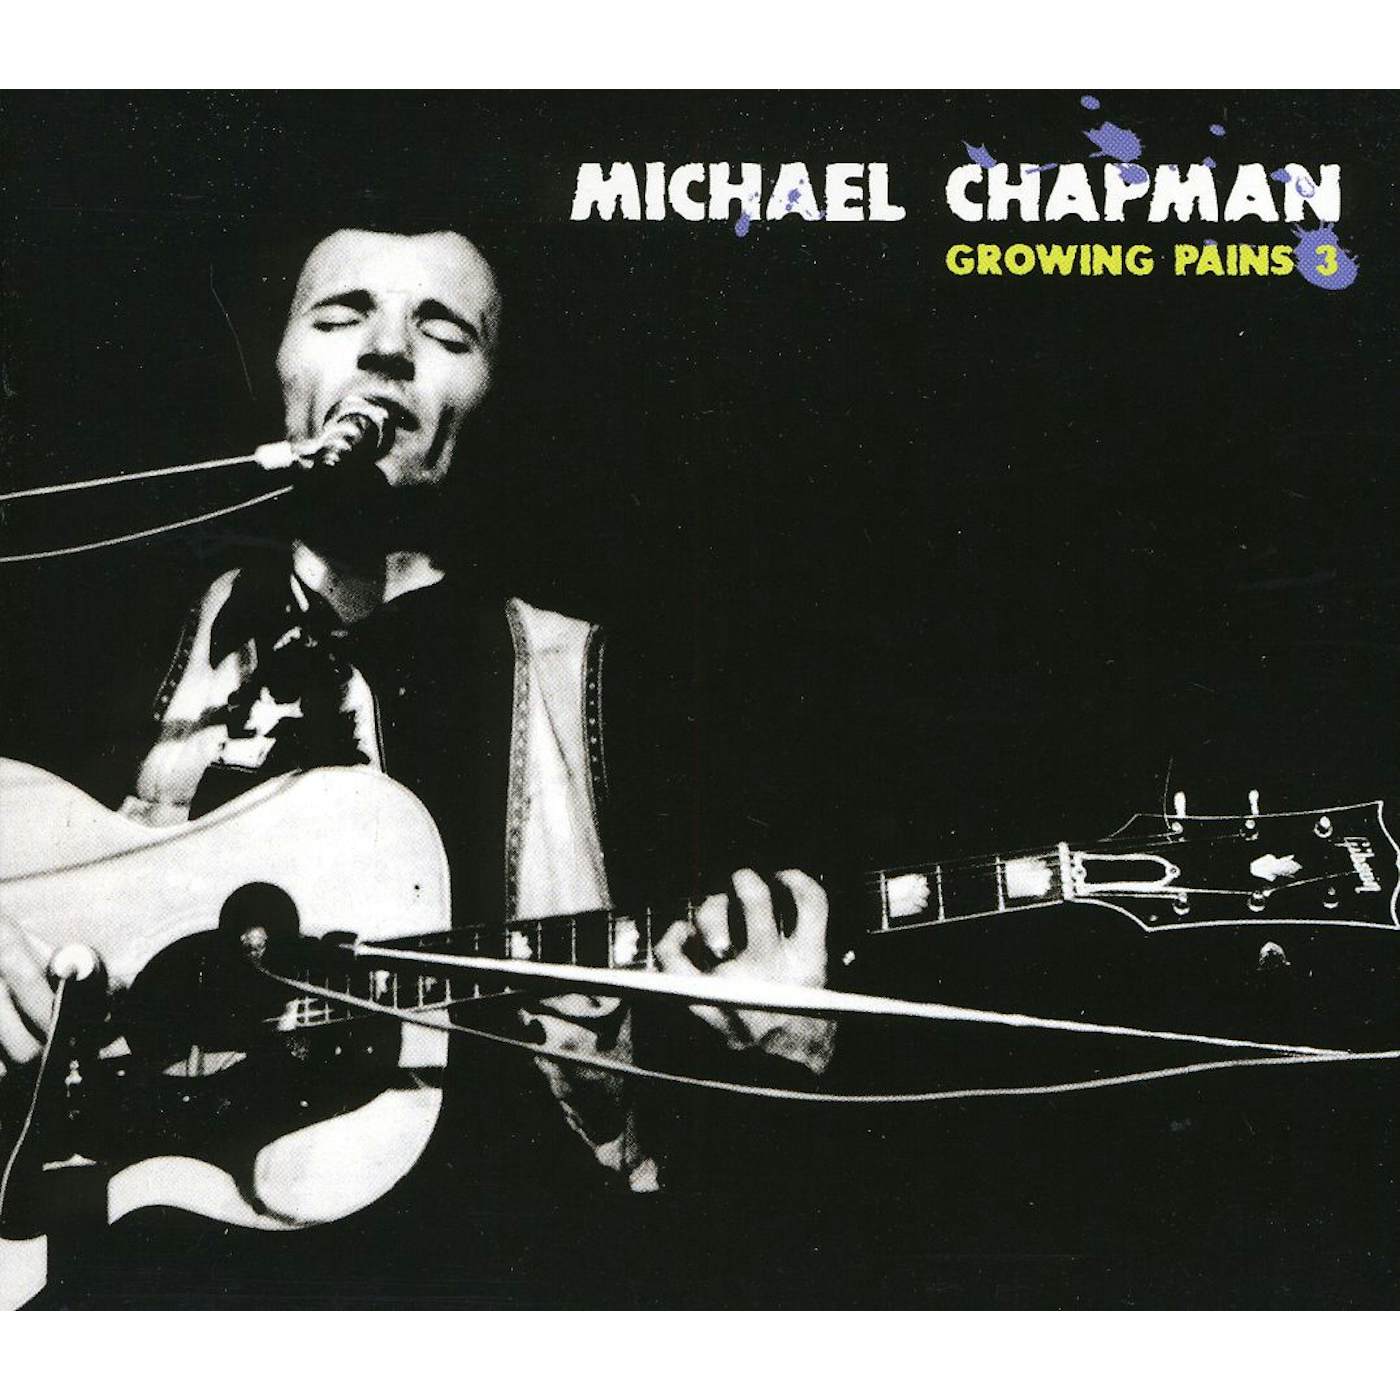 Michael Chapman GROWING PAINS 3 CD